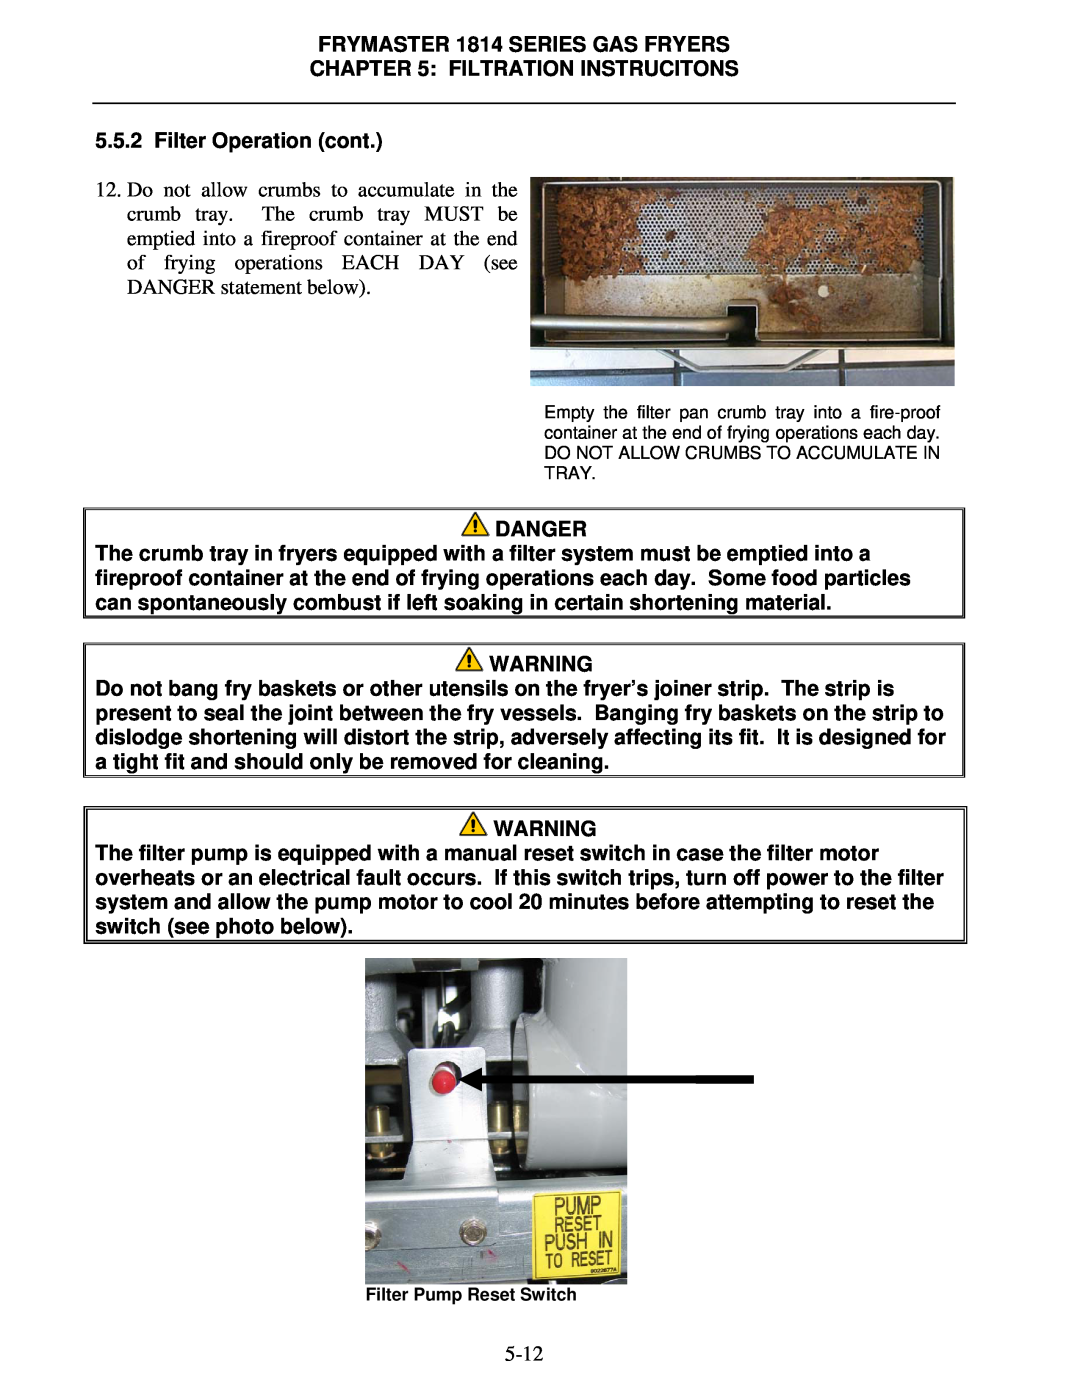 Frymaster BK1814 operation manual 5-12, Filter Pump Reset Switch 